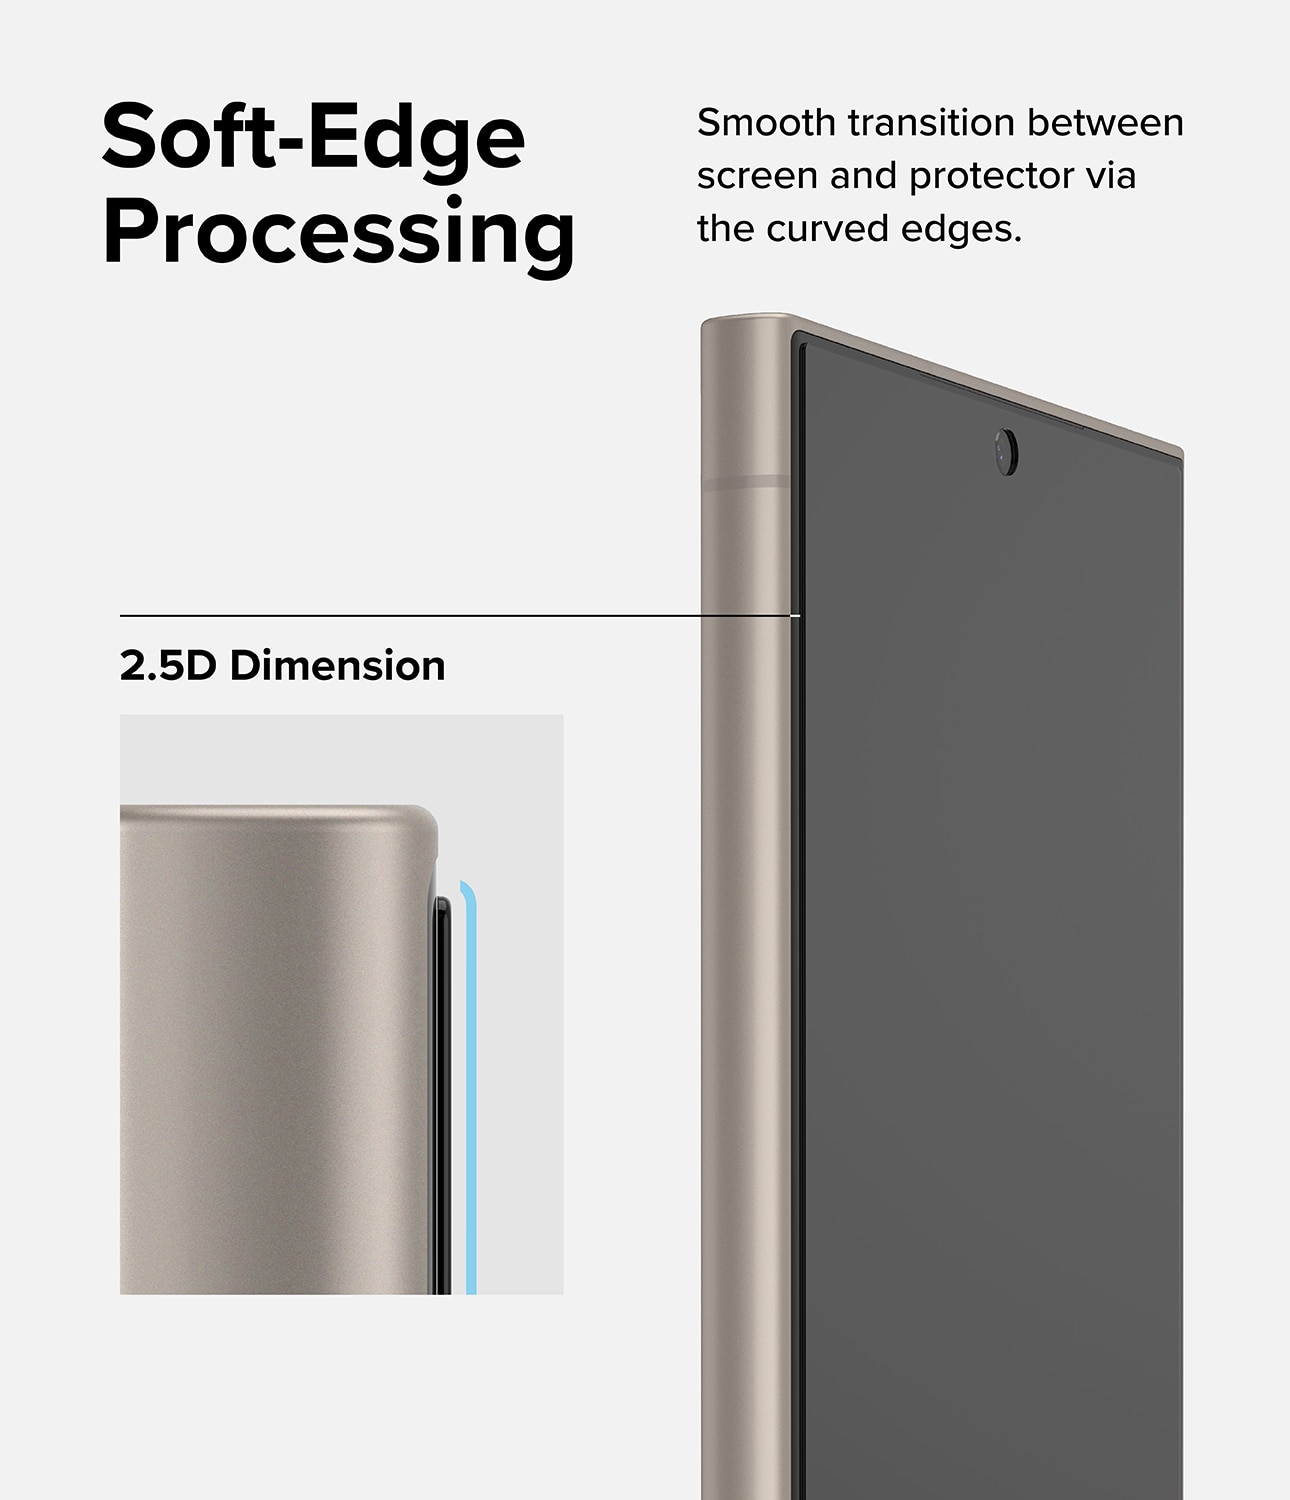 Samsung Galaxy S24 Ultra Easy Slide Glass (2-pack)